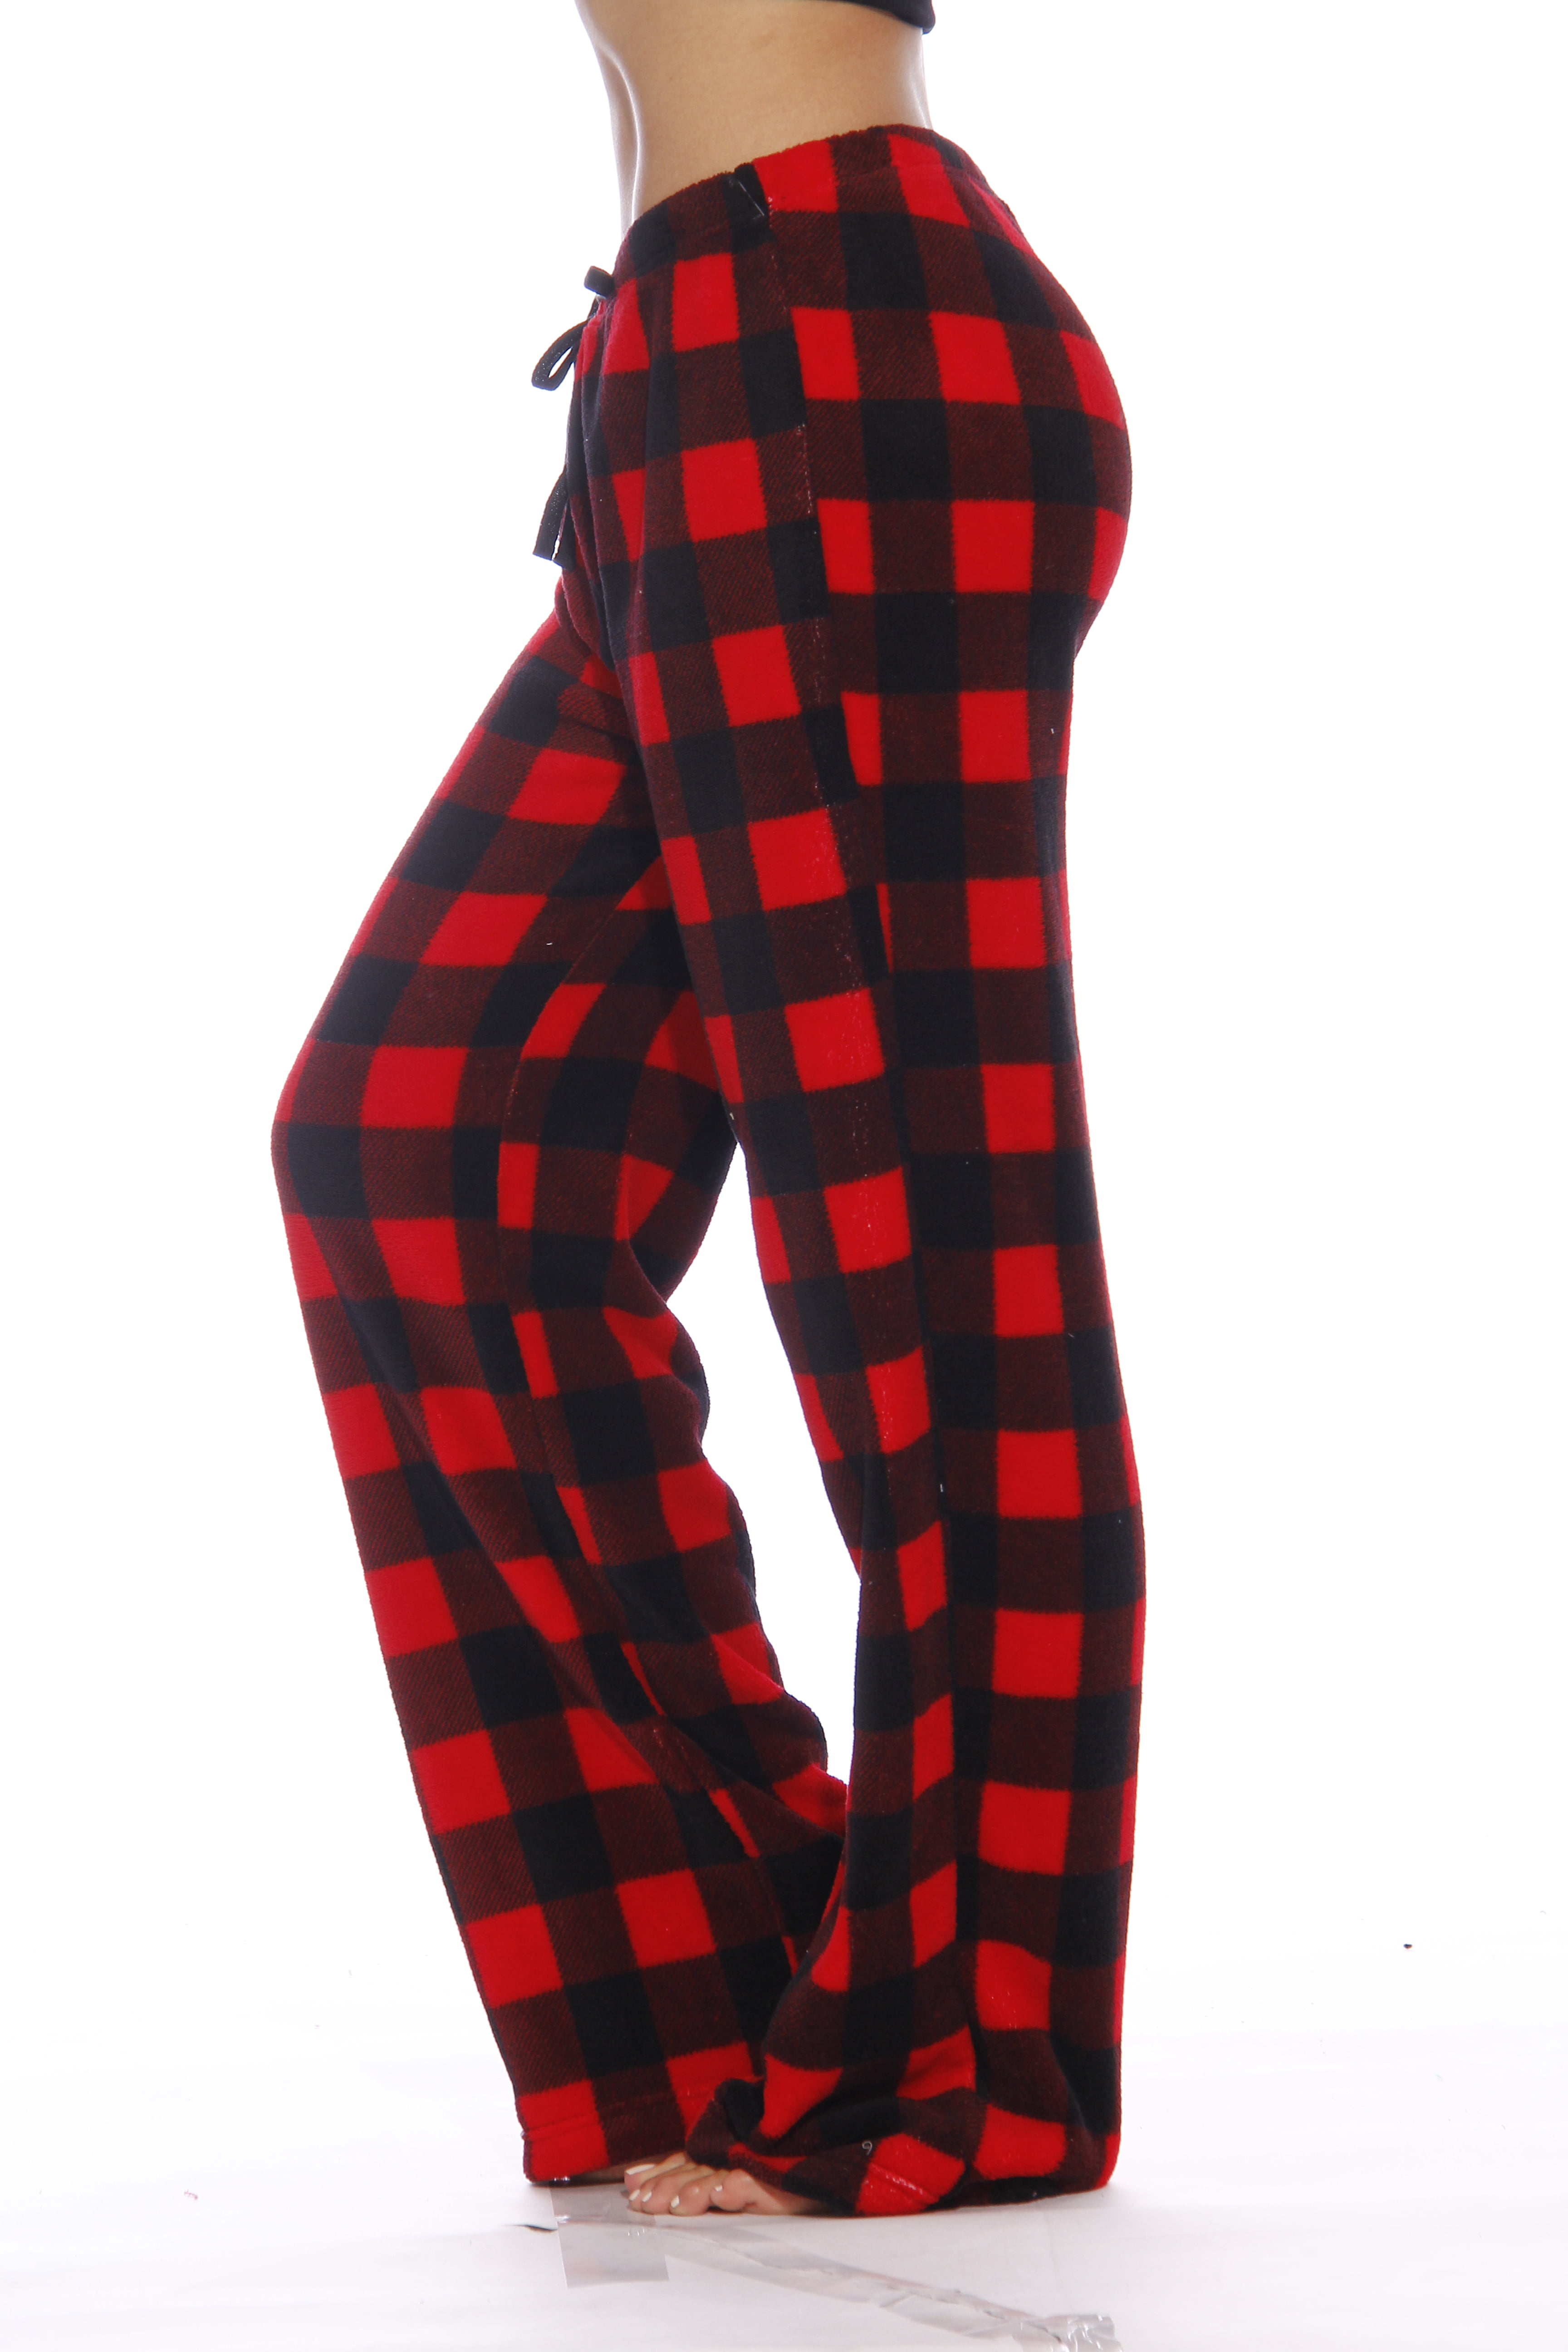 followme Silky Fleece Buffalo Plaid Pajama Pants for Women, Red